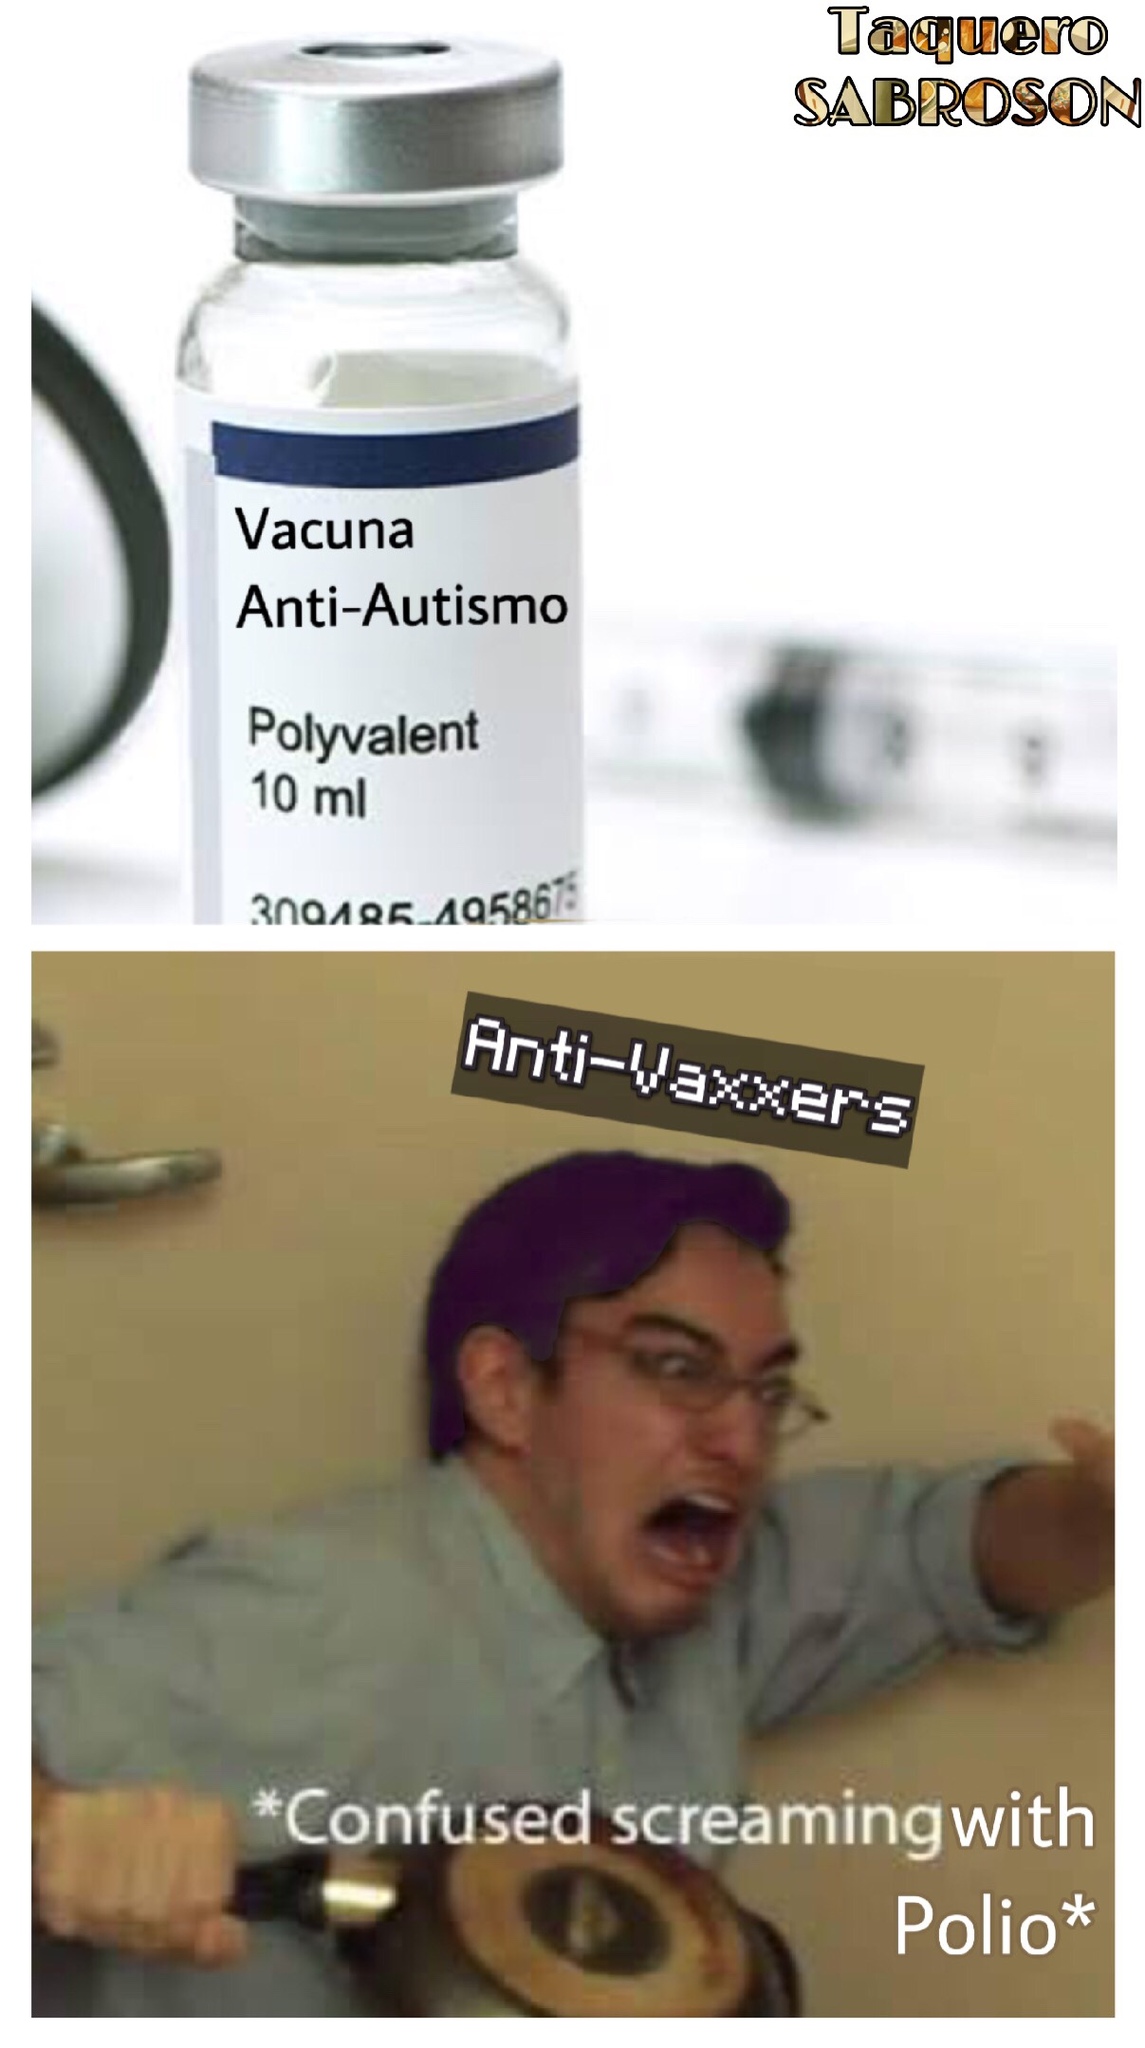 “Lis vicunis caisin autismi” -Una Anti-vaxxer (2018) (Murió dos dias después a a cause de Polio porque no estaba Vacunada) - meme